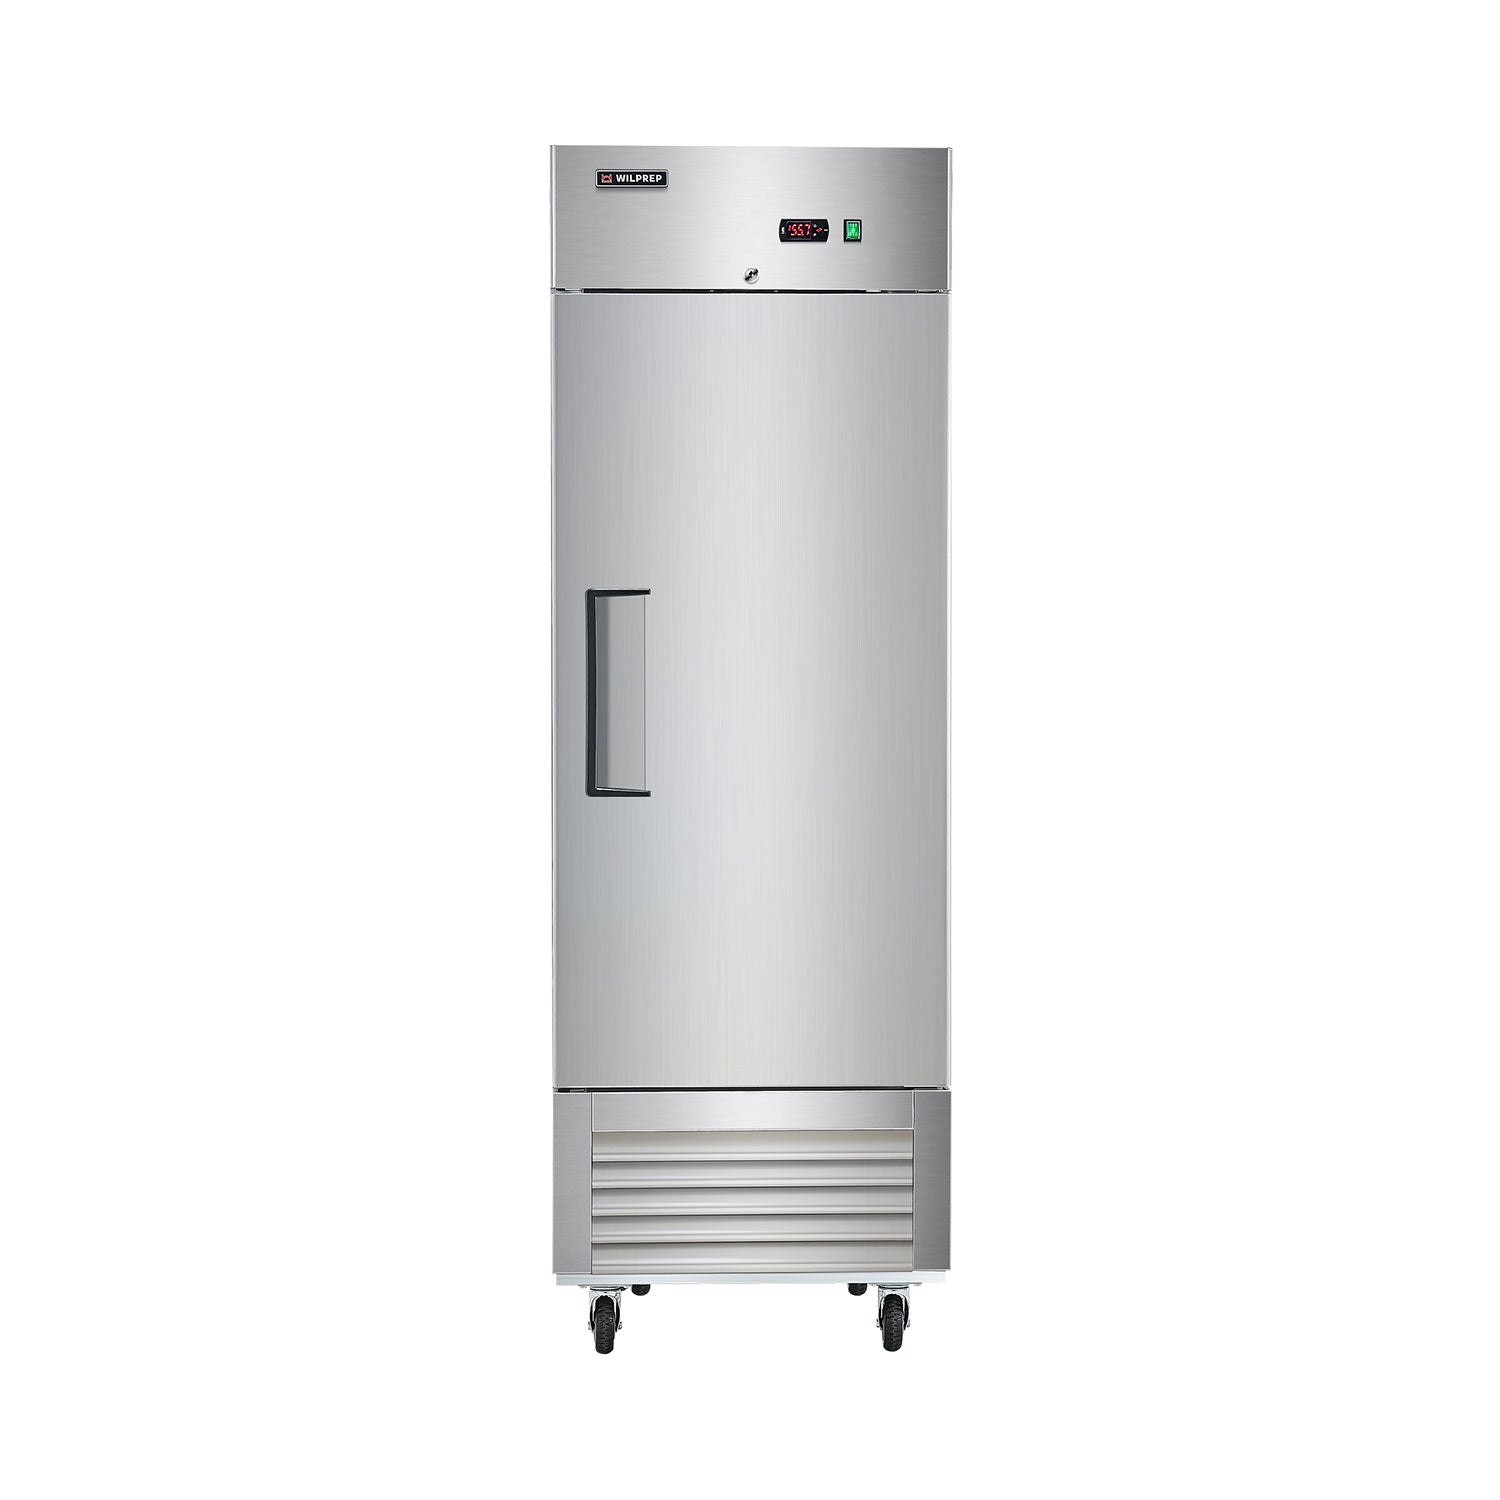 27" Commercial Solid Door Reach-in Refrigerator 18.7 cu. ft. Capacity